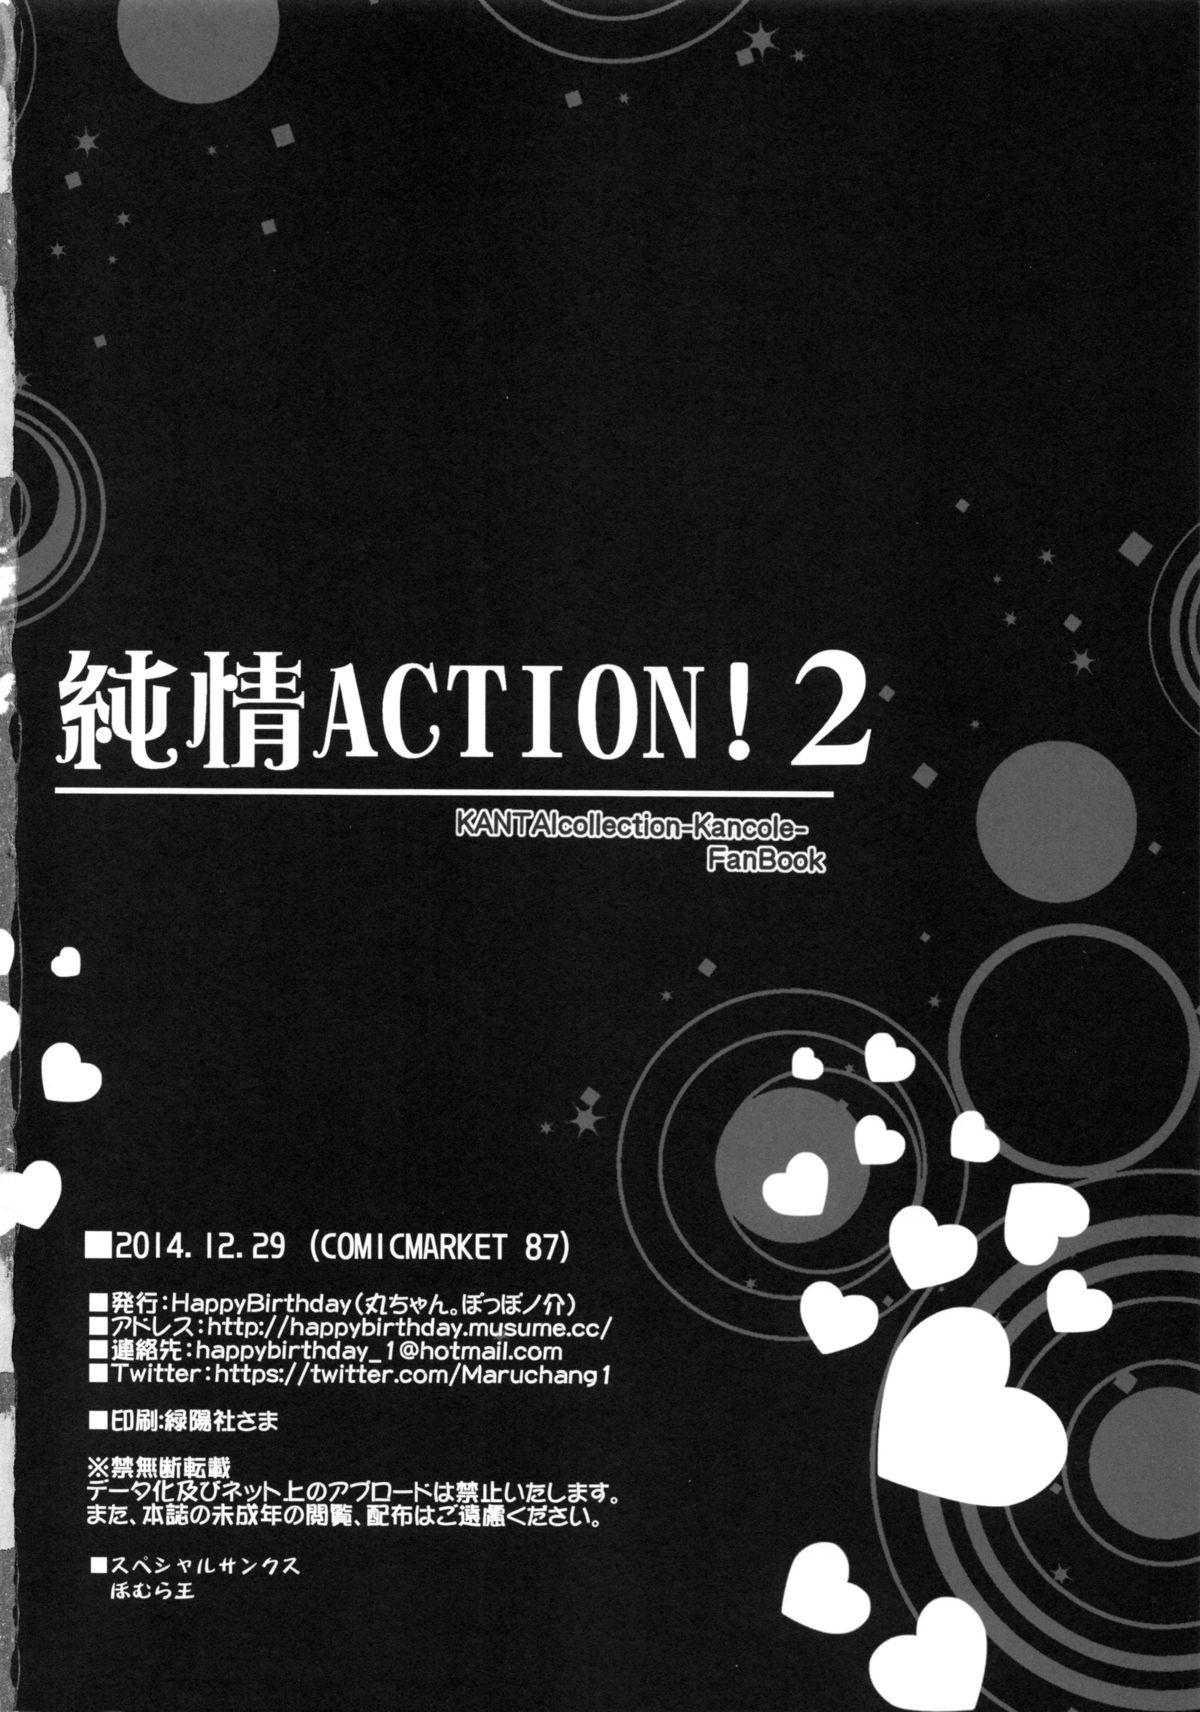 Junjou ACTION! 2 20